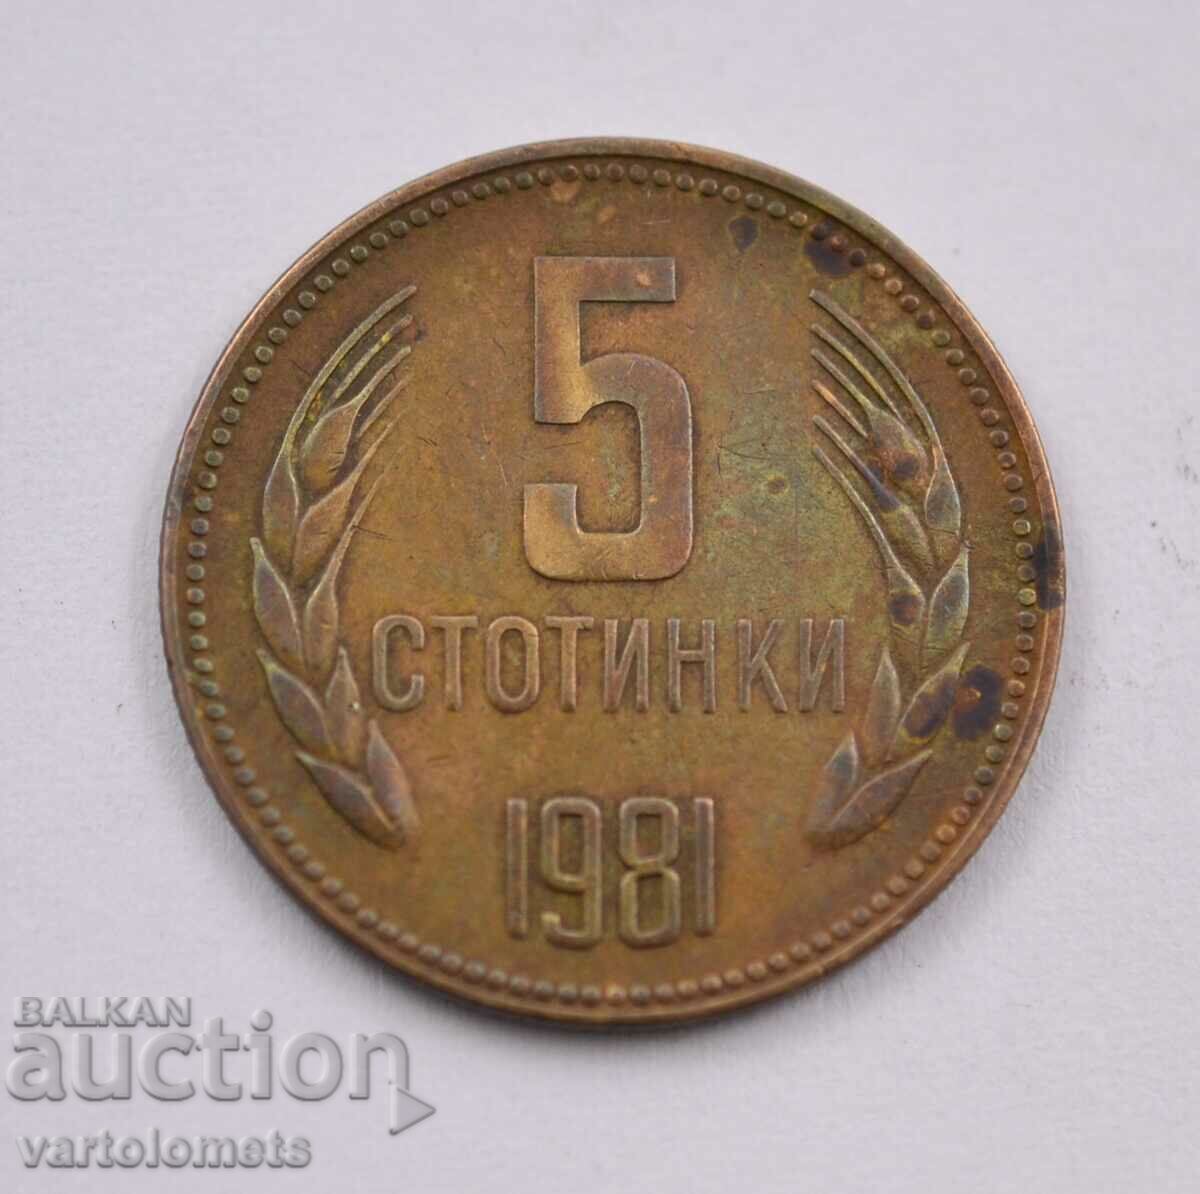 5 cents 1981 - Bulgaria